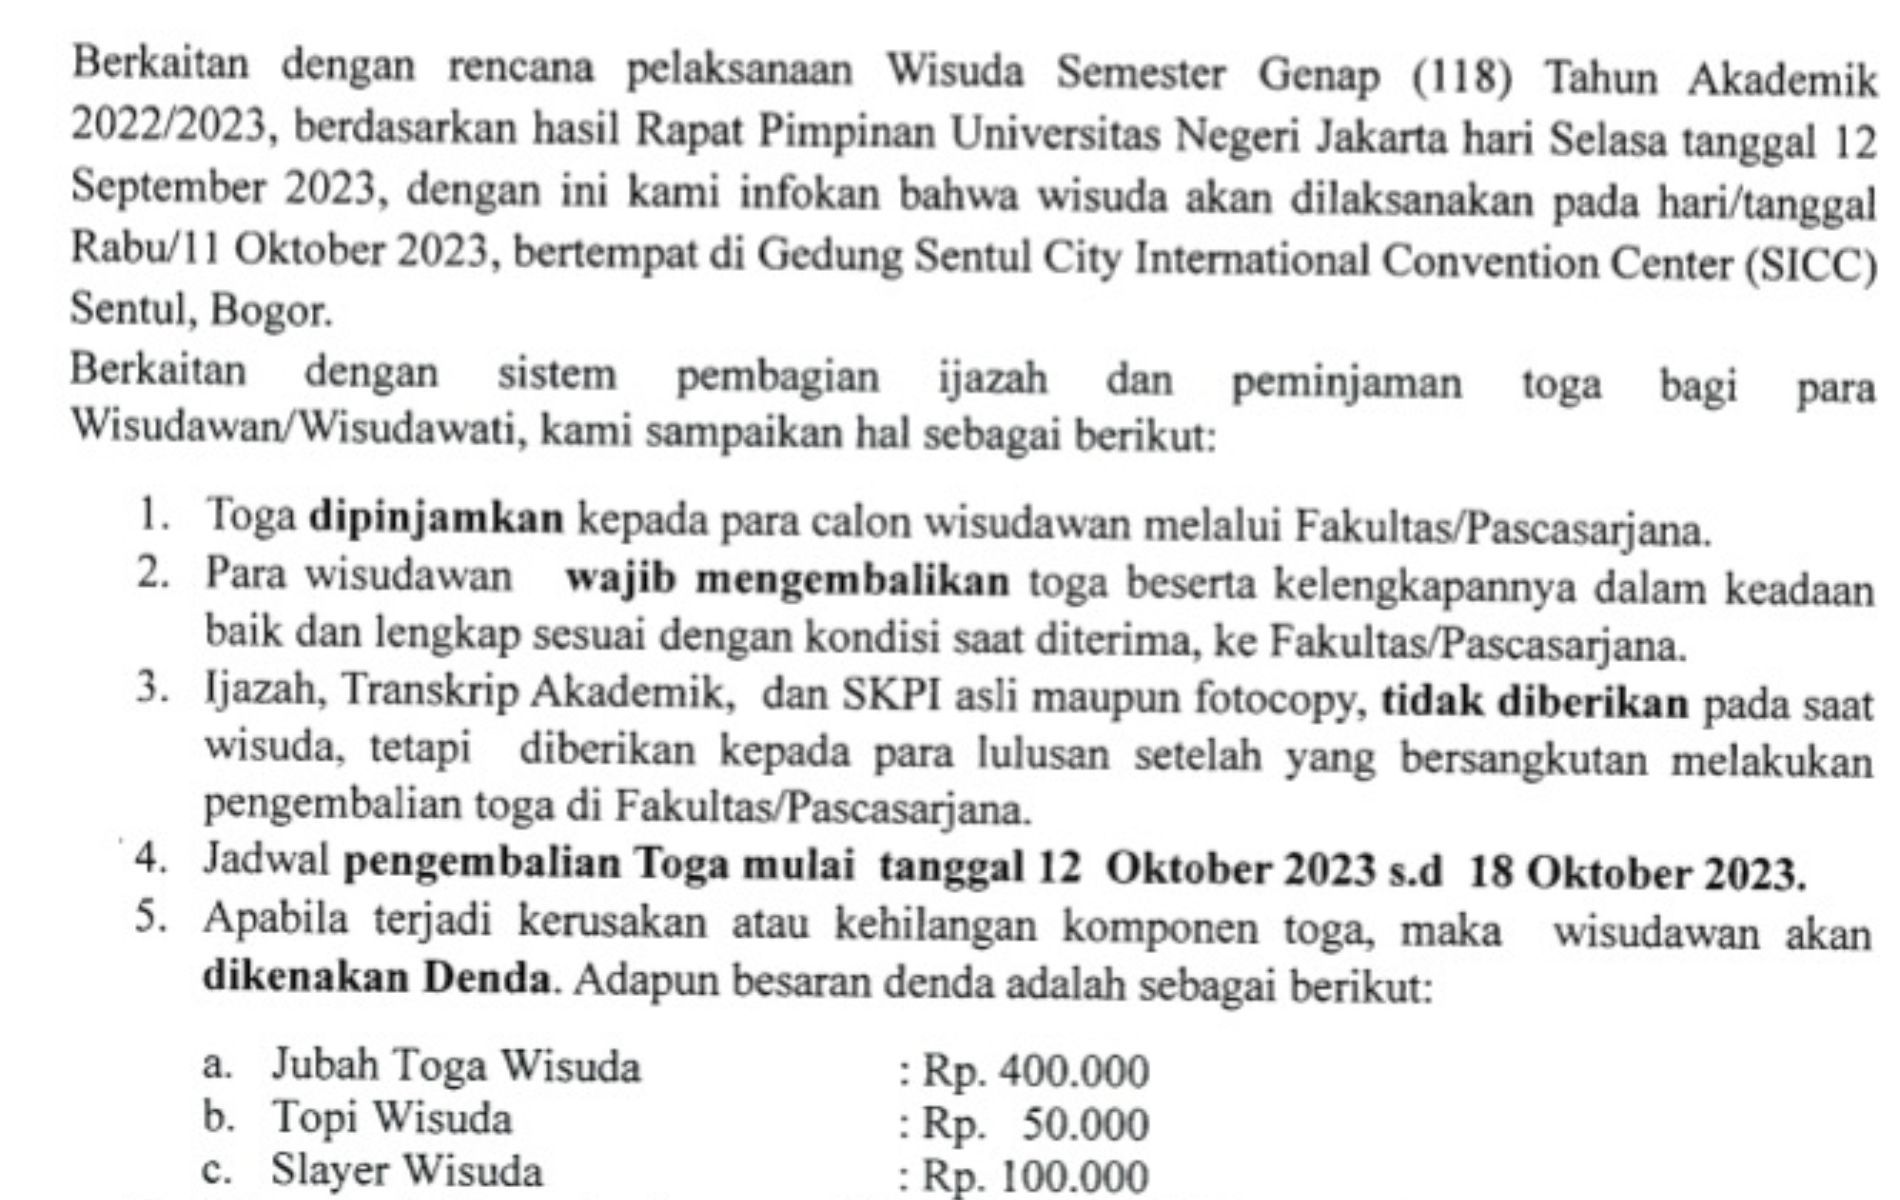 Viral denda peminjaman toga wisuda Universitas Negeri Jakarta (UNJ) sebesar Rp550 ribu.